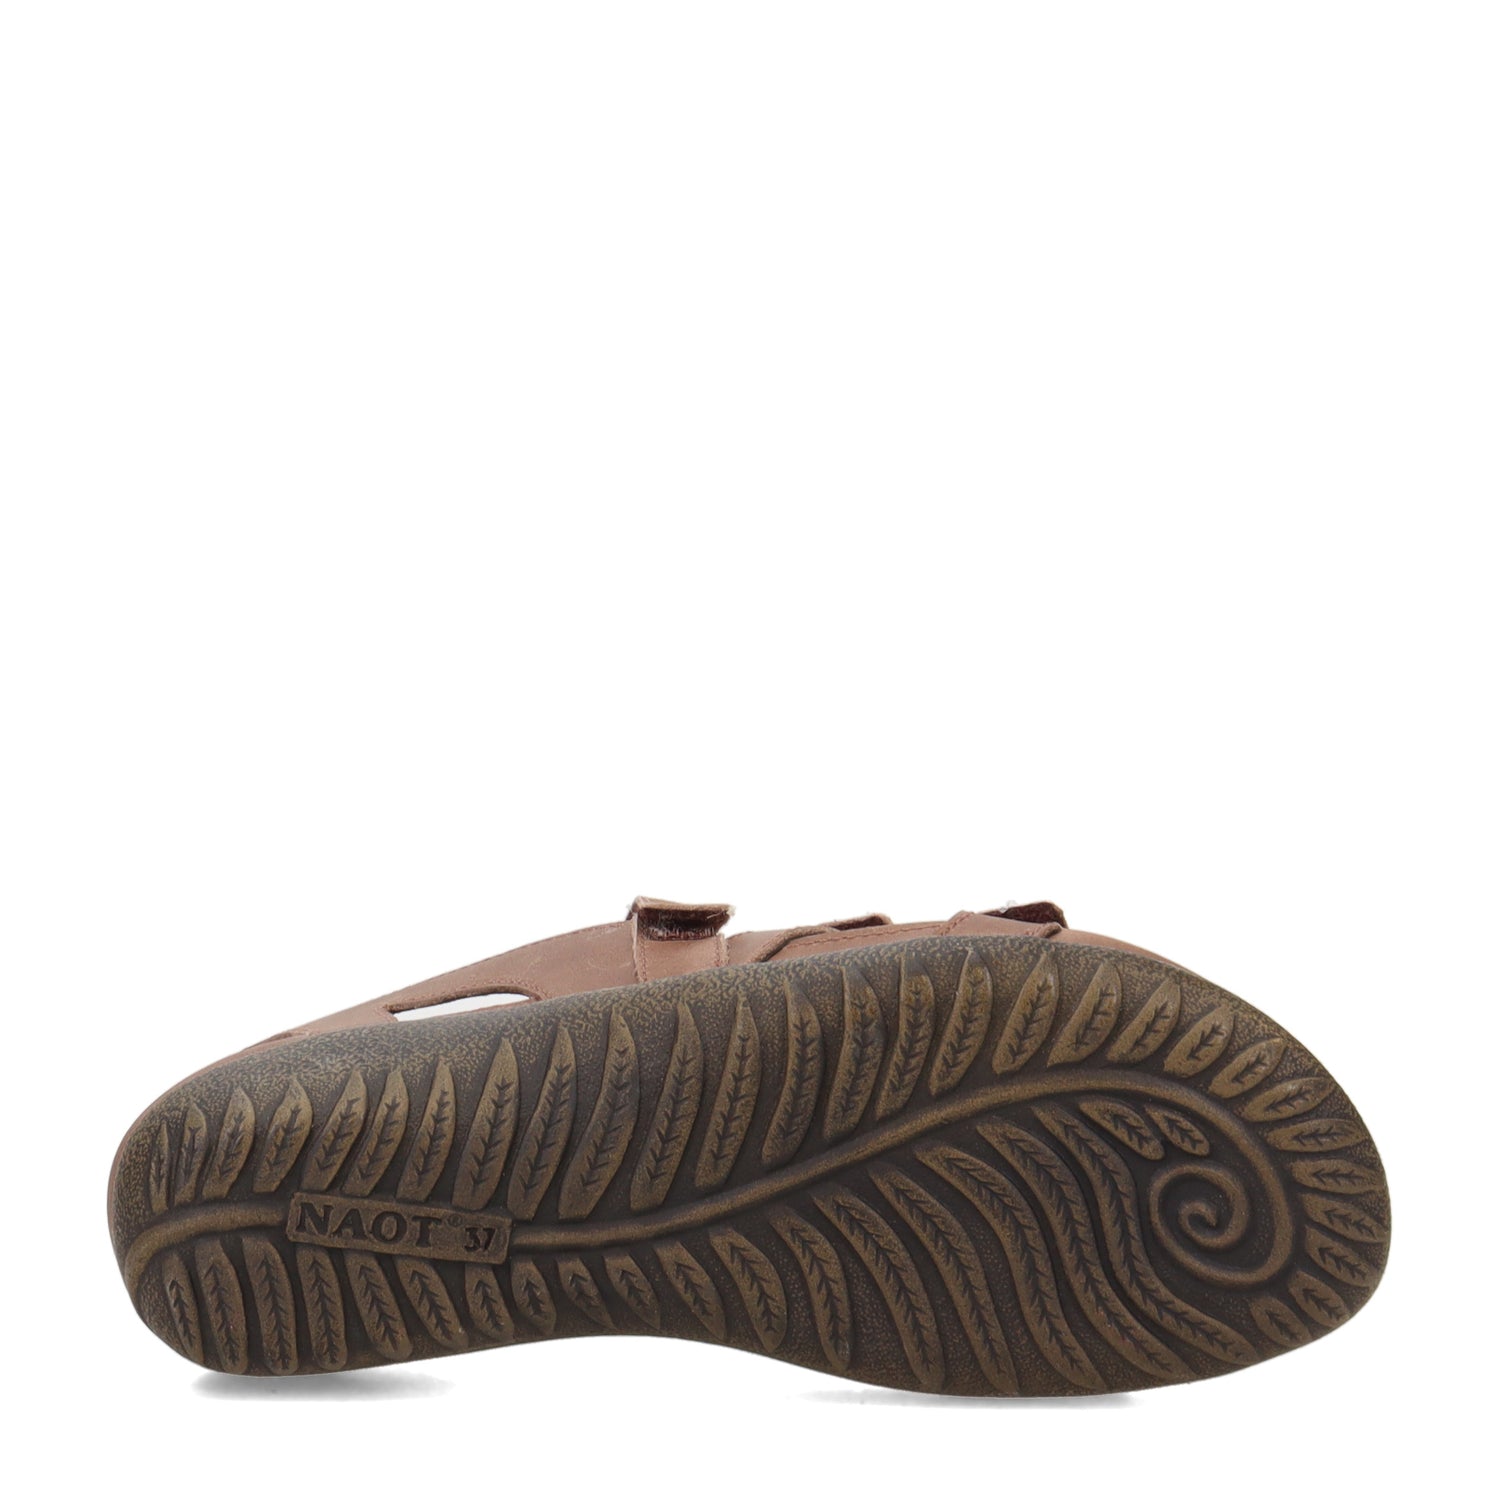 Peltz Shoes  Women's Naot Whetu Sandal Oily Bark 11201-EE6